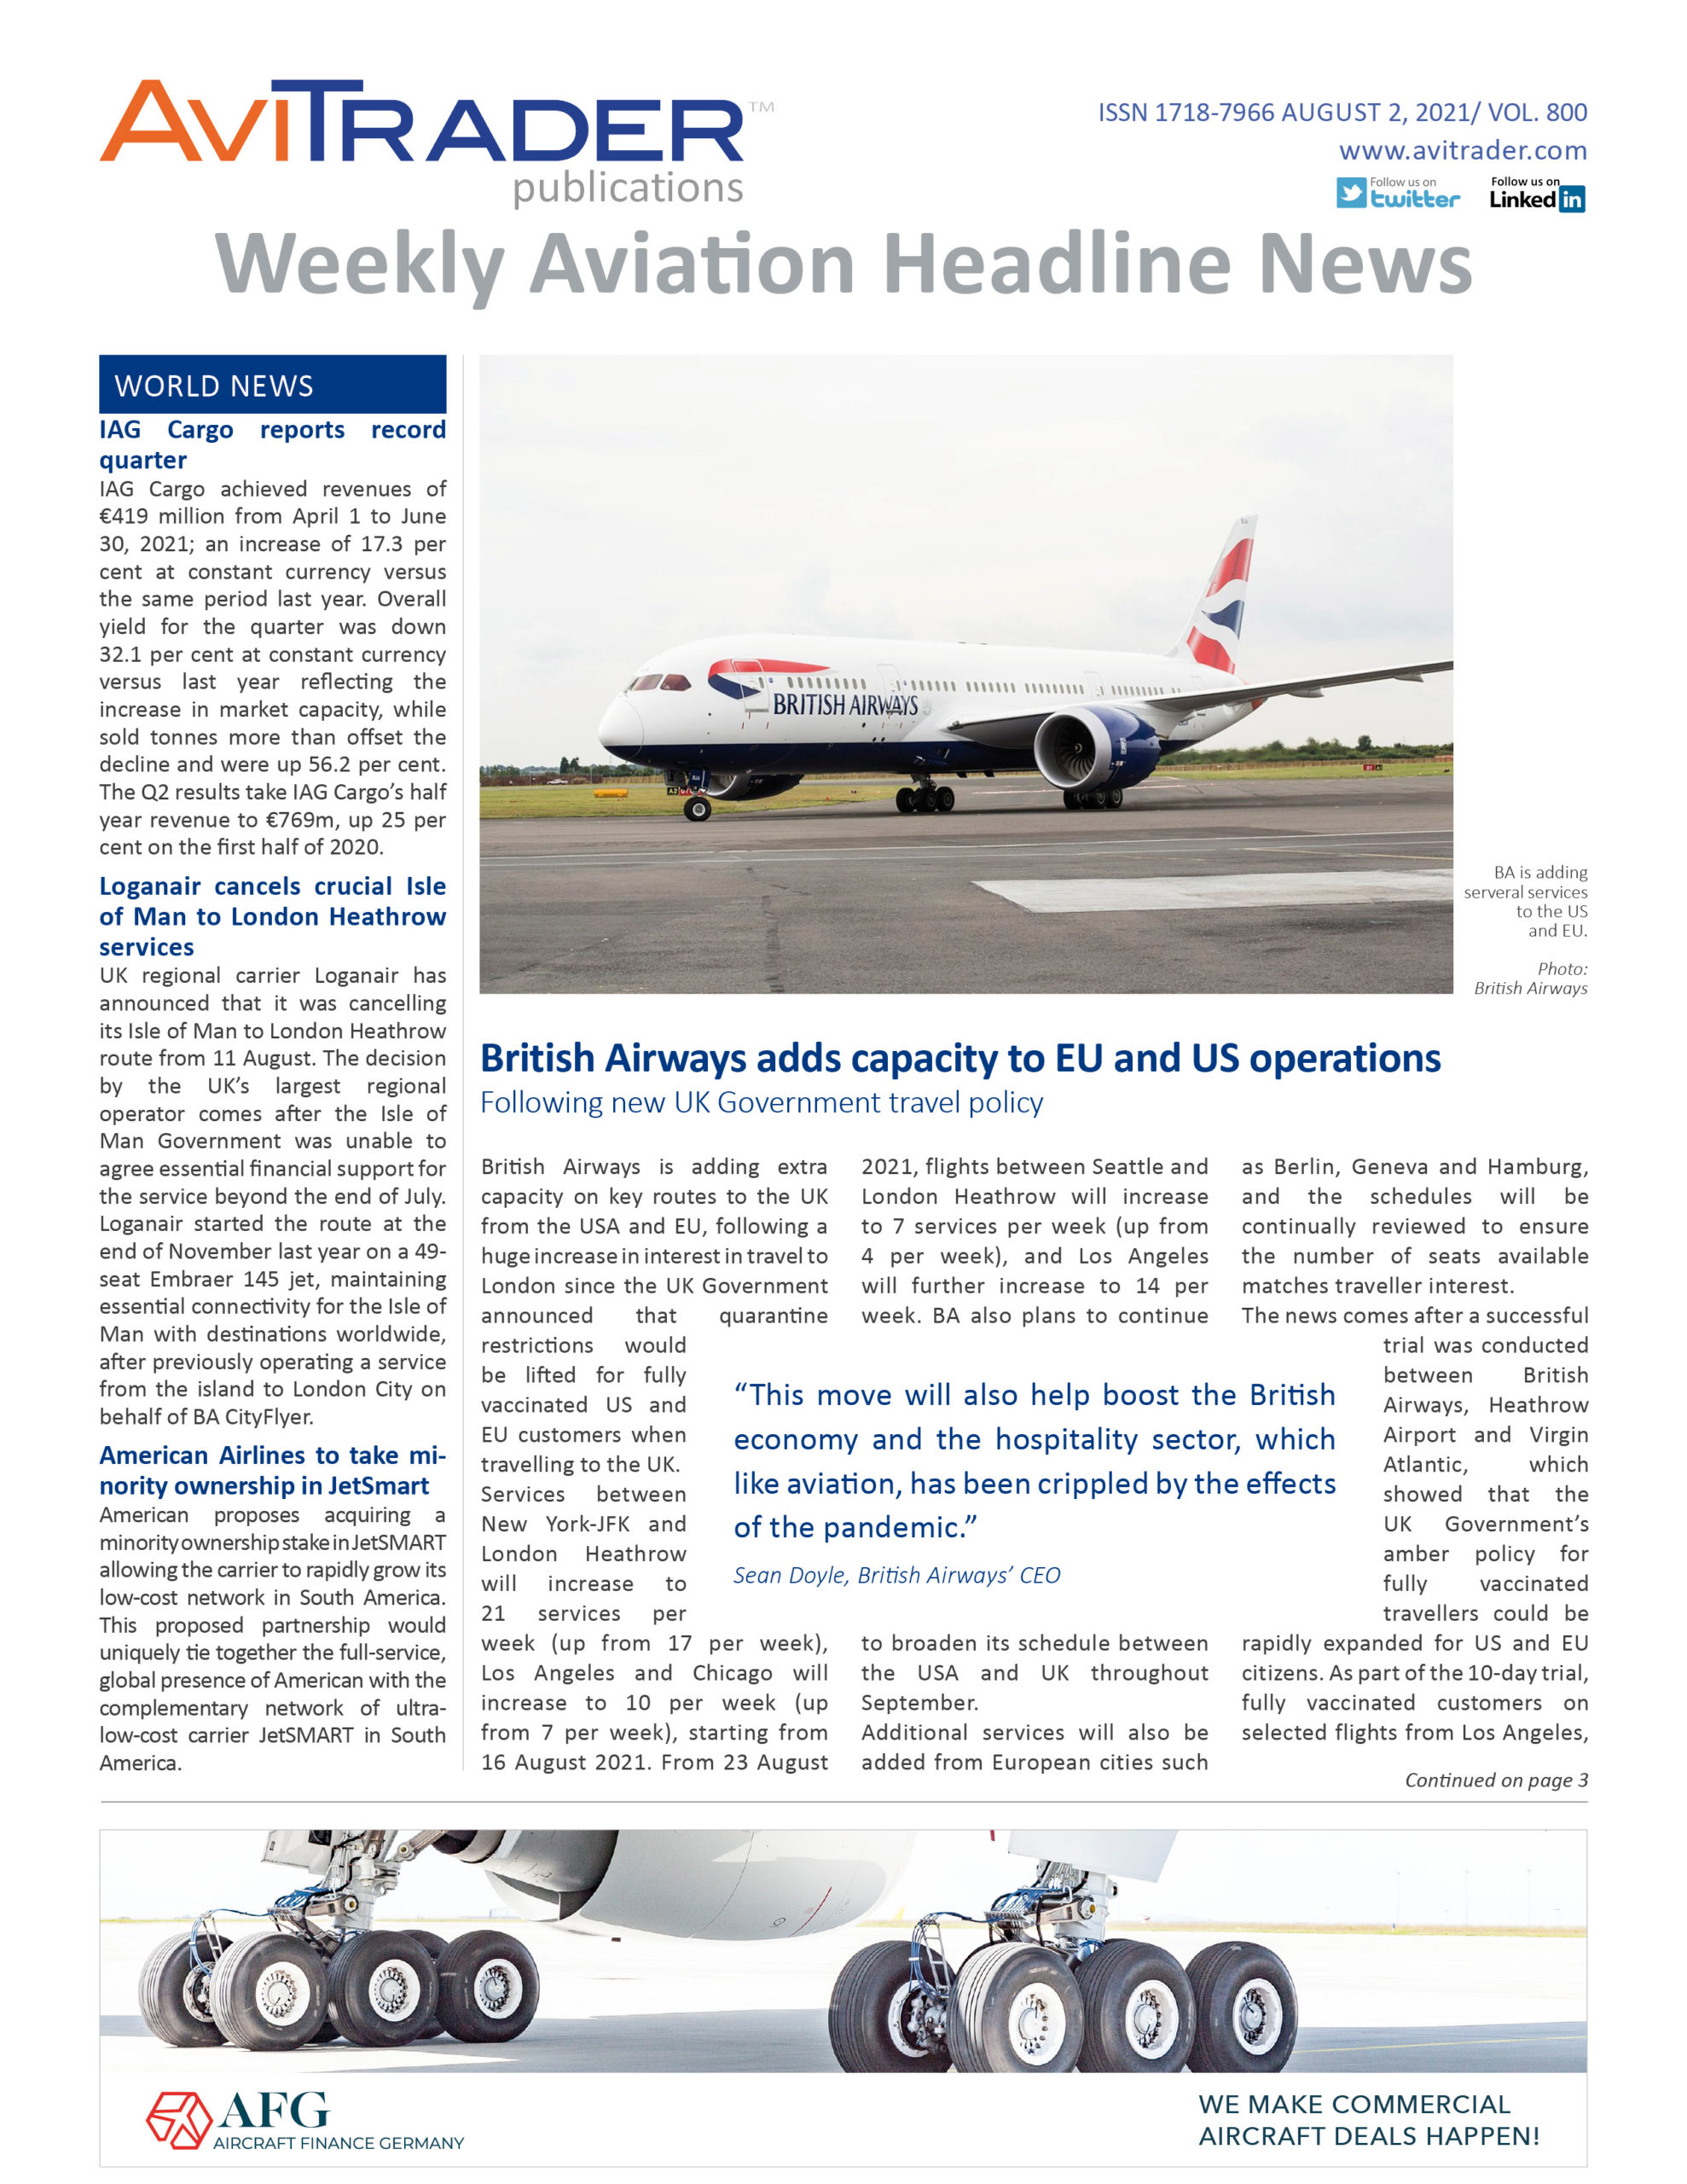 AviTrader_Weekly_Headline_News_Cover_2021-08-02